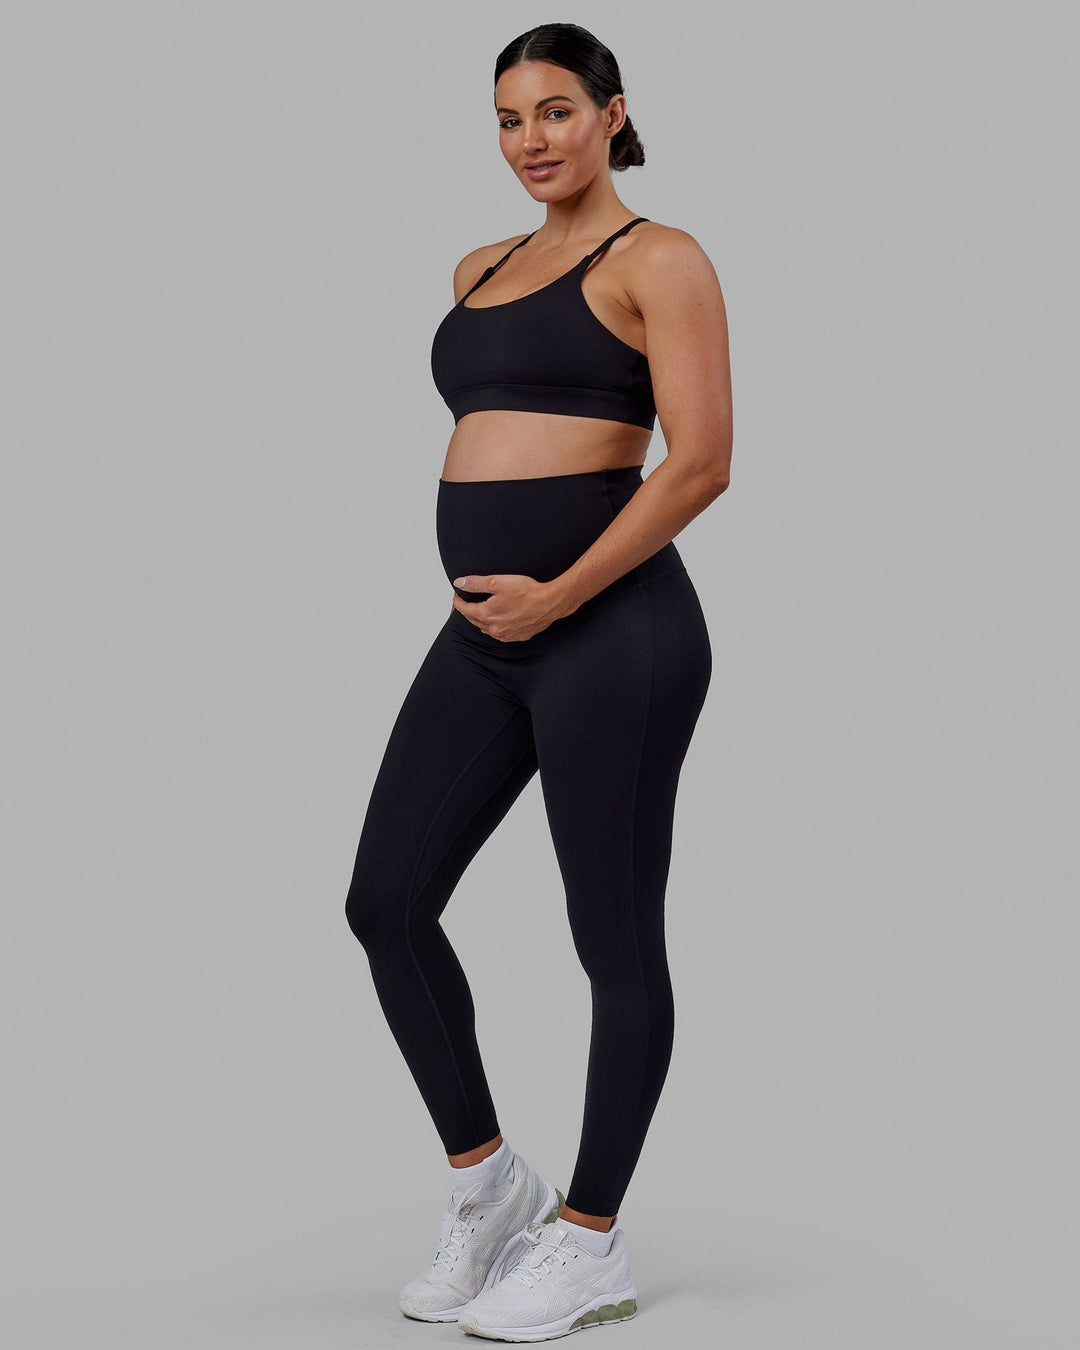 Woman wearing Elixir Full Length Maternity Tight - Black